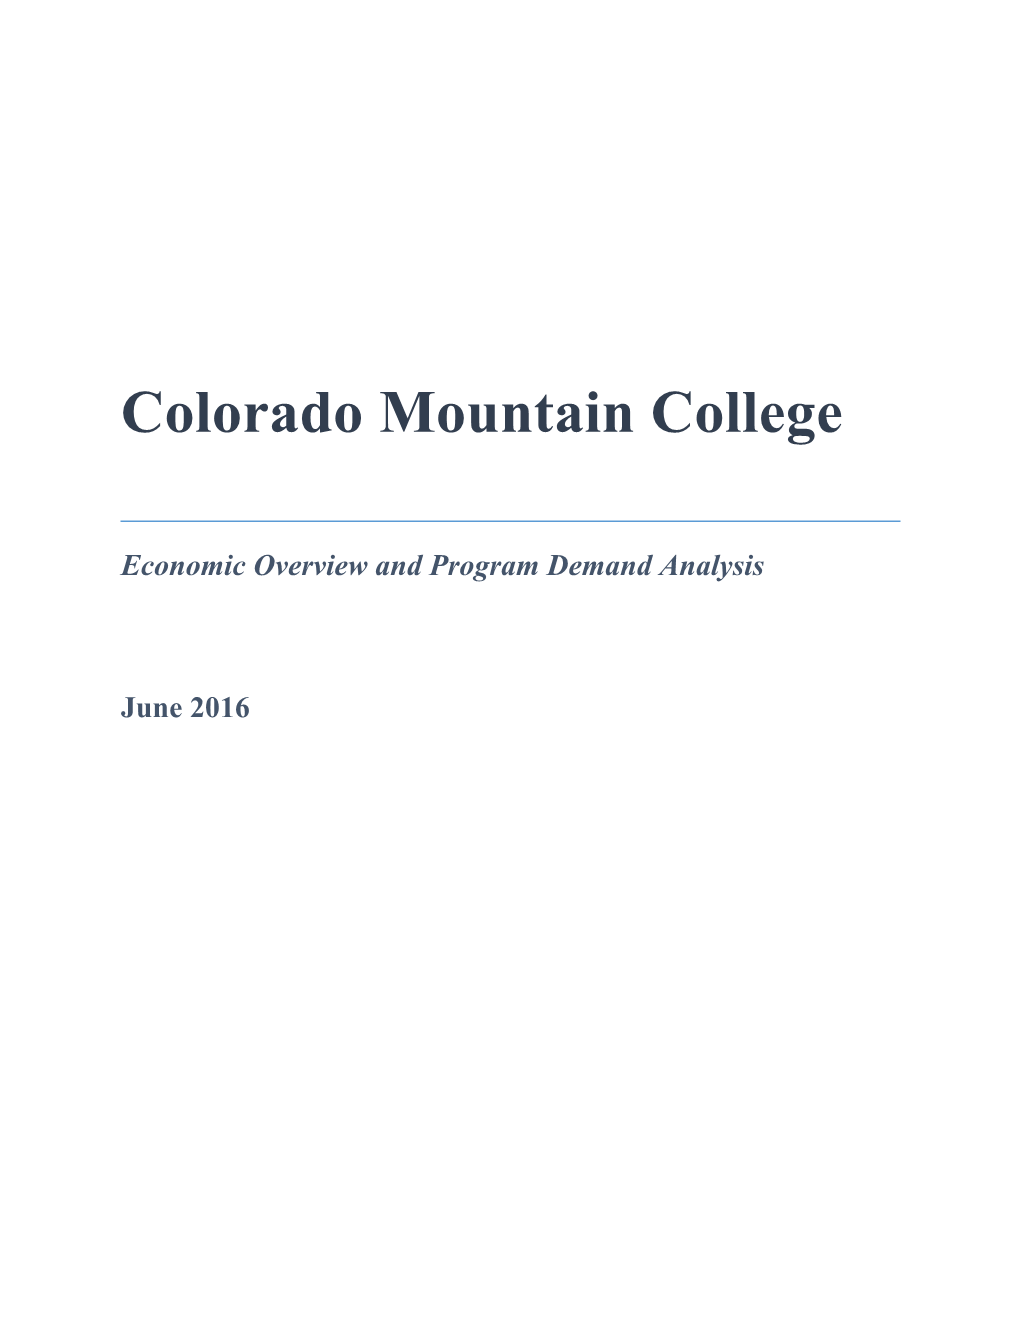 Colorado Mountain College Program Demand Analysis